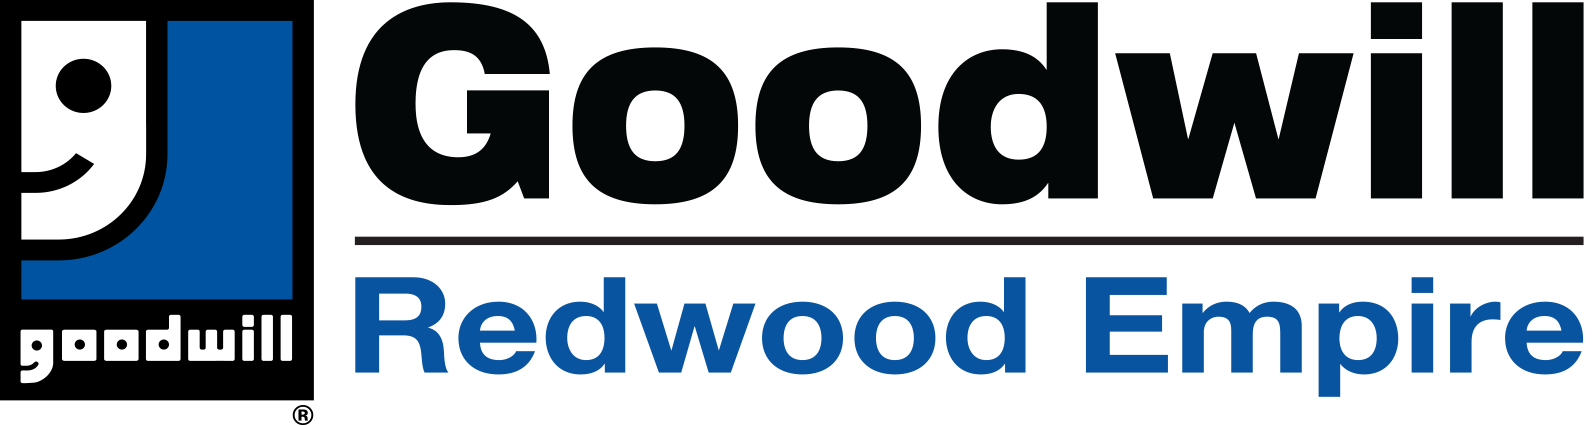 Goodwill Redwood Empire logo